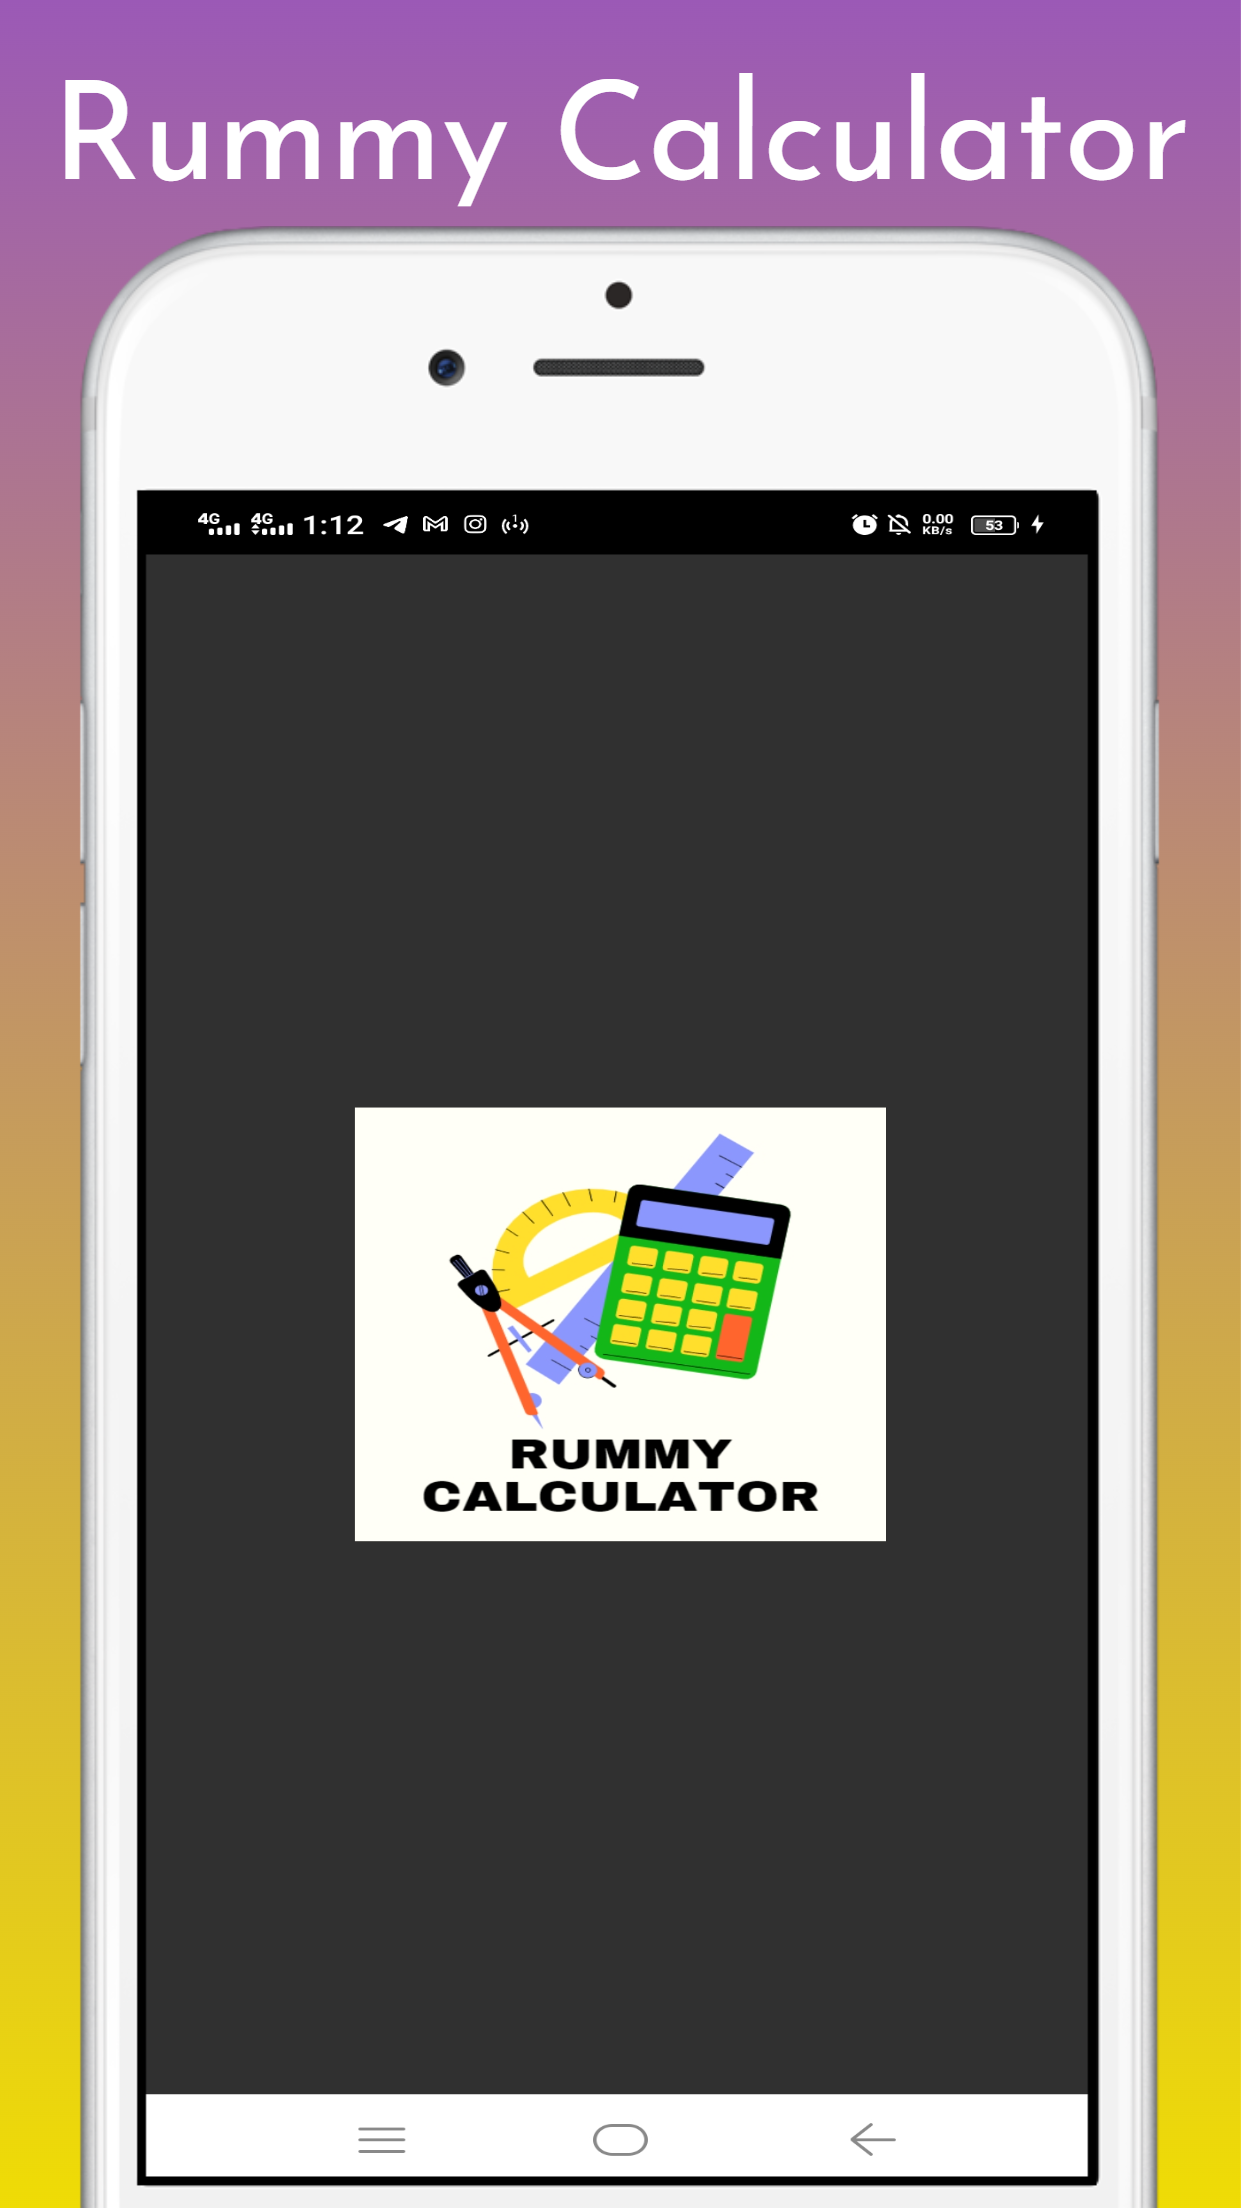 Rummy Calculator